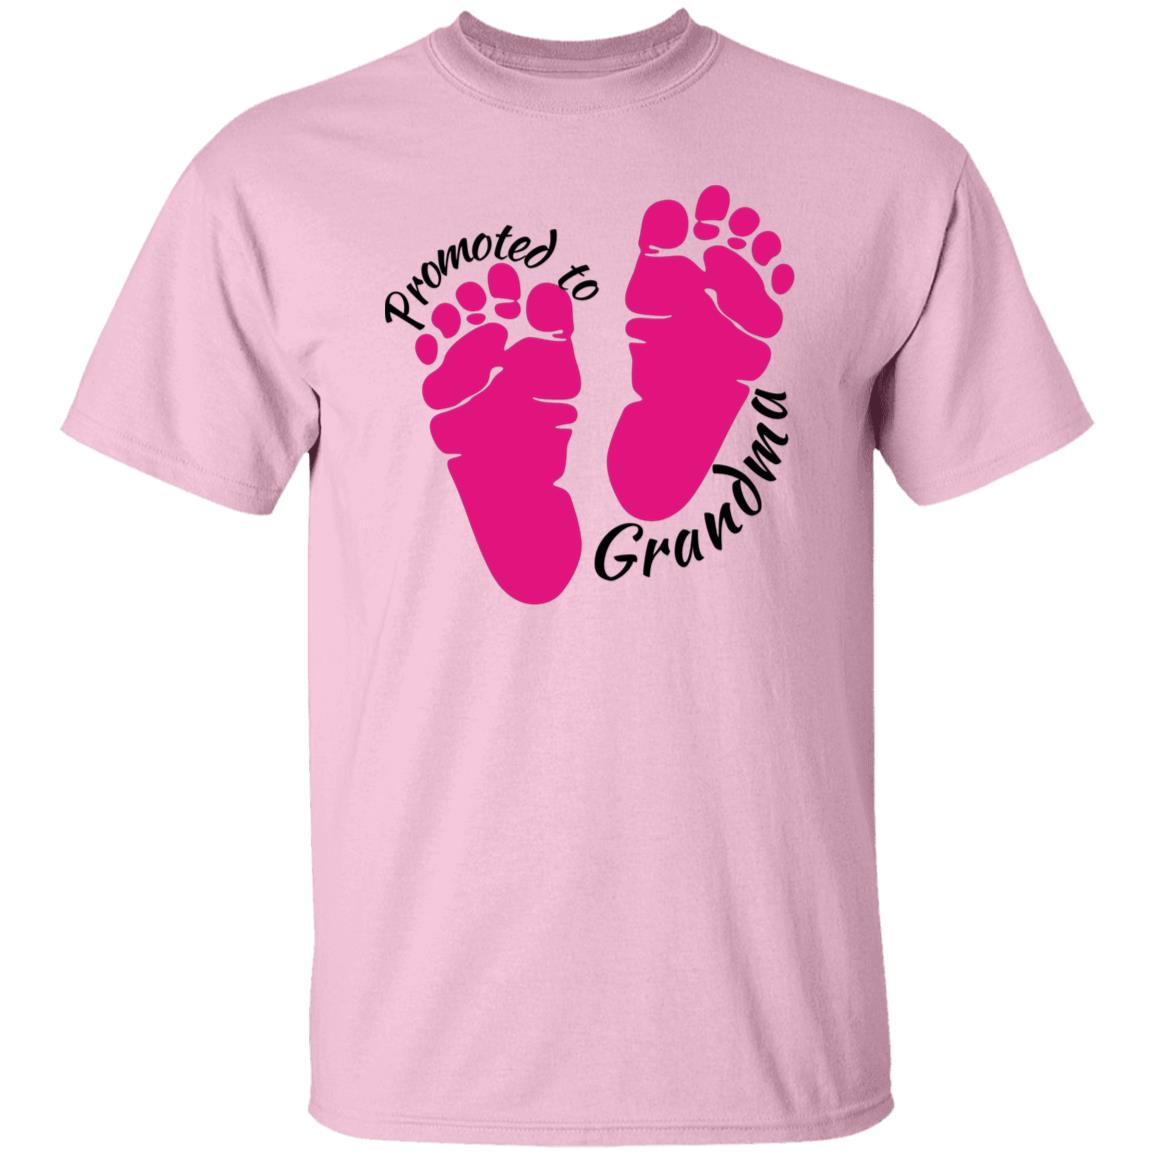 Promoted to Grandma (pink print)